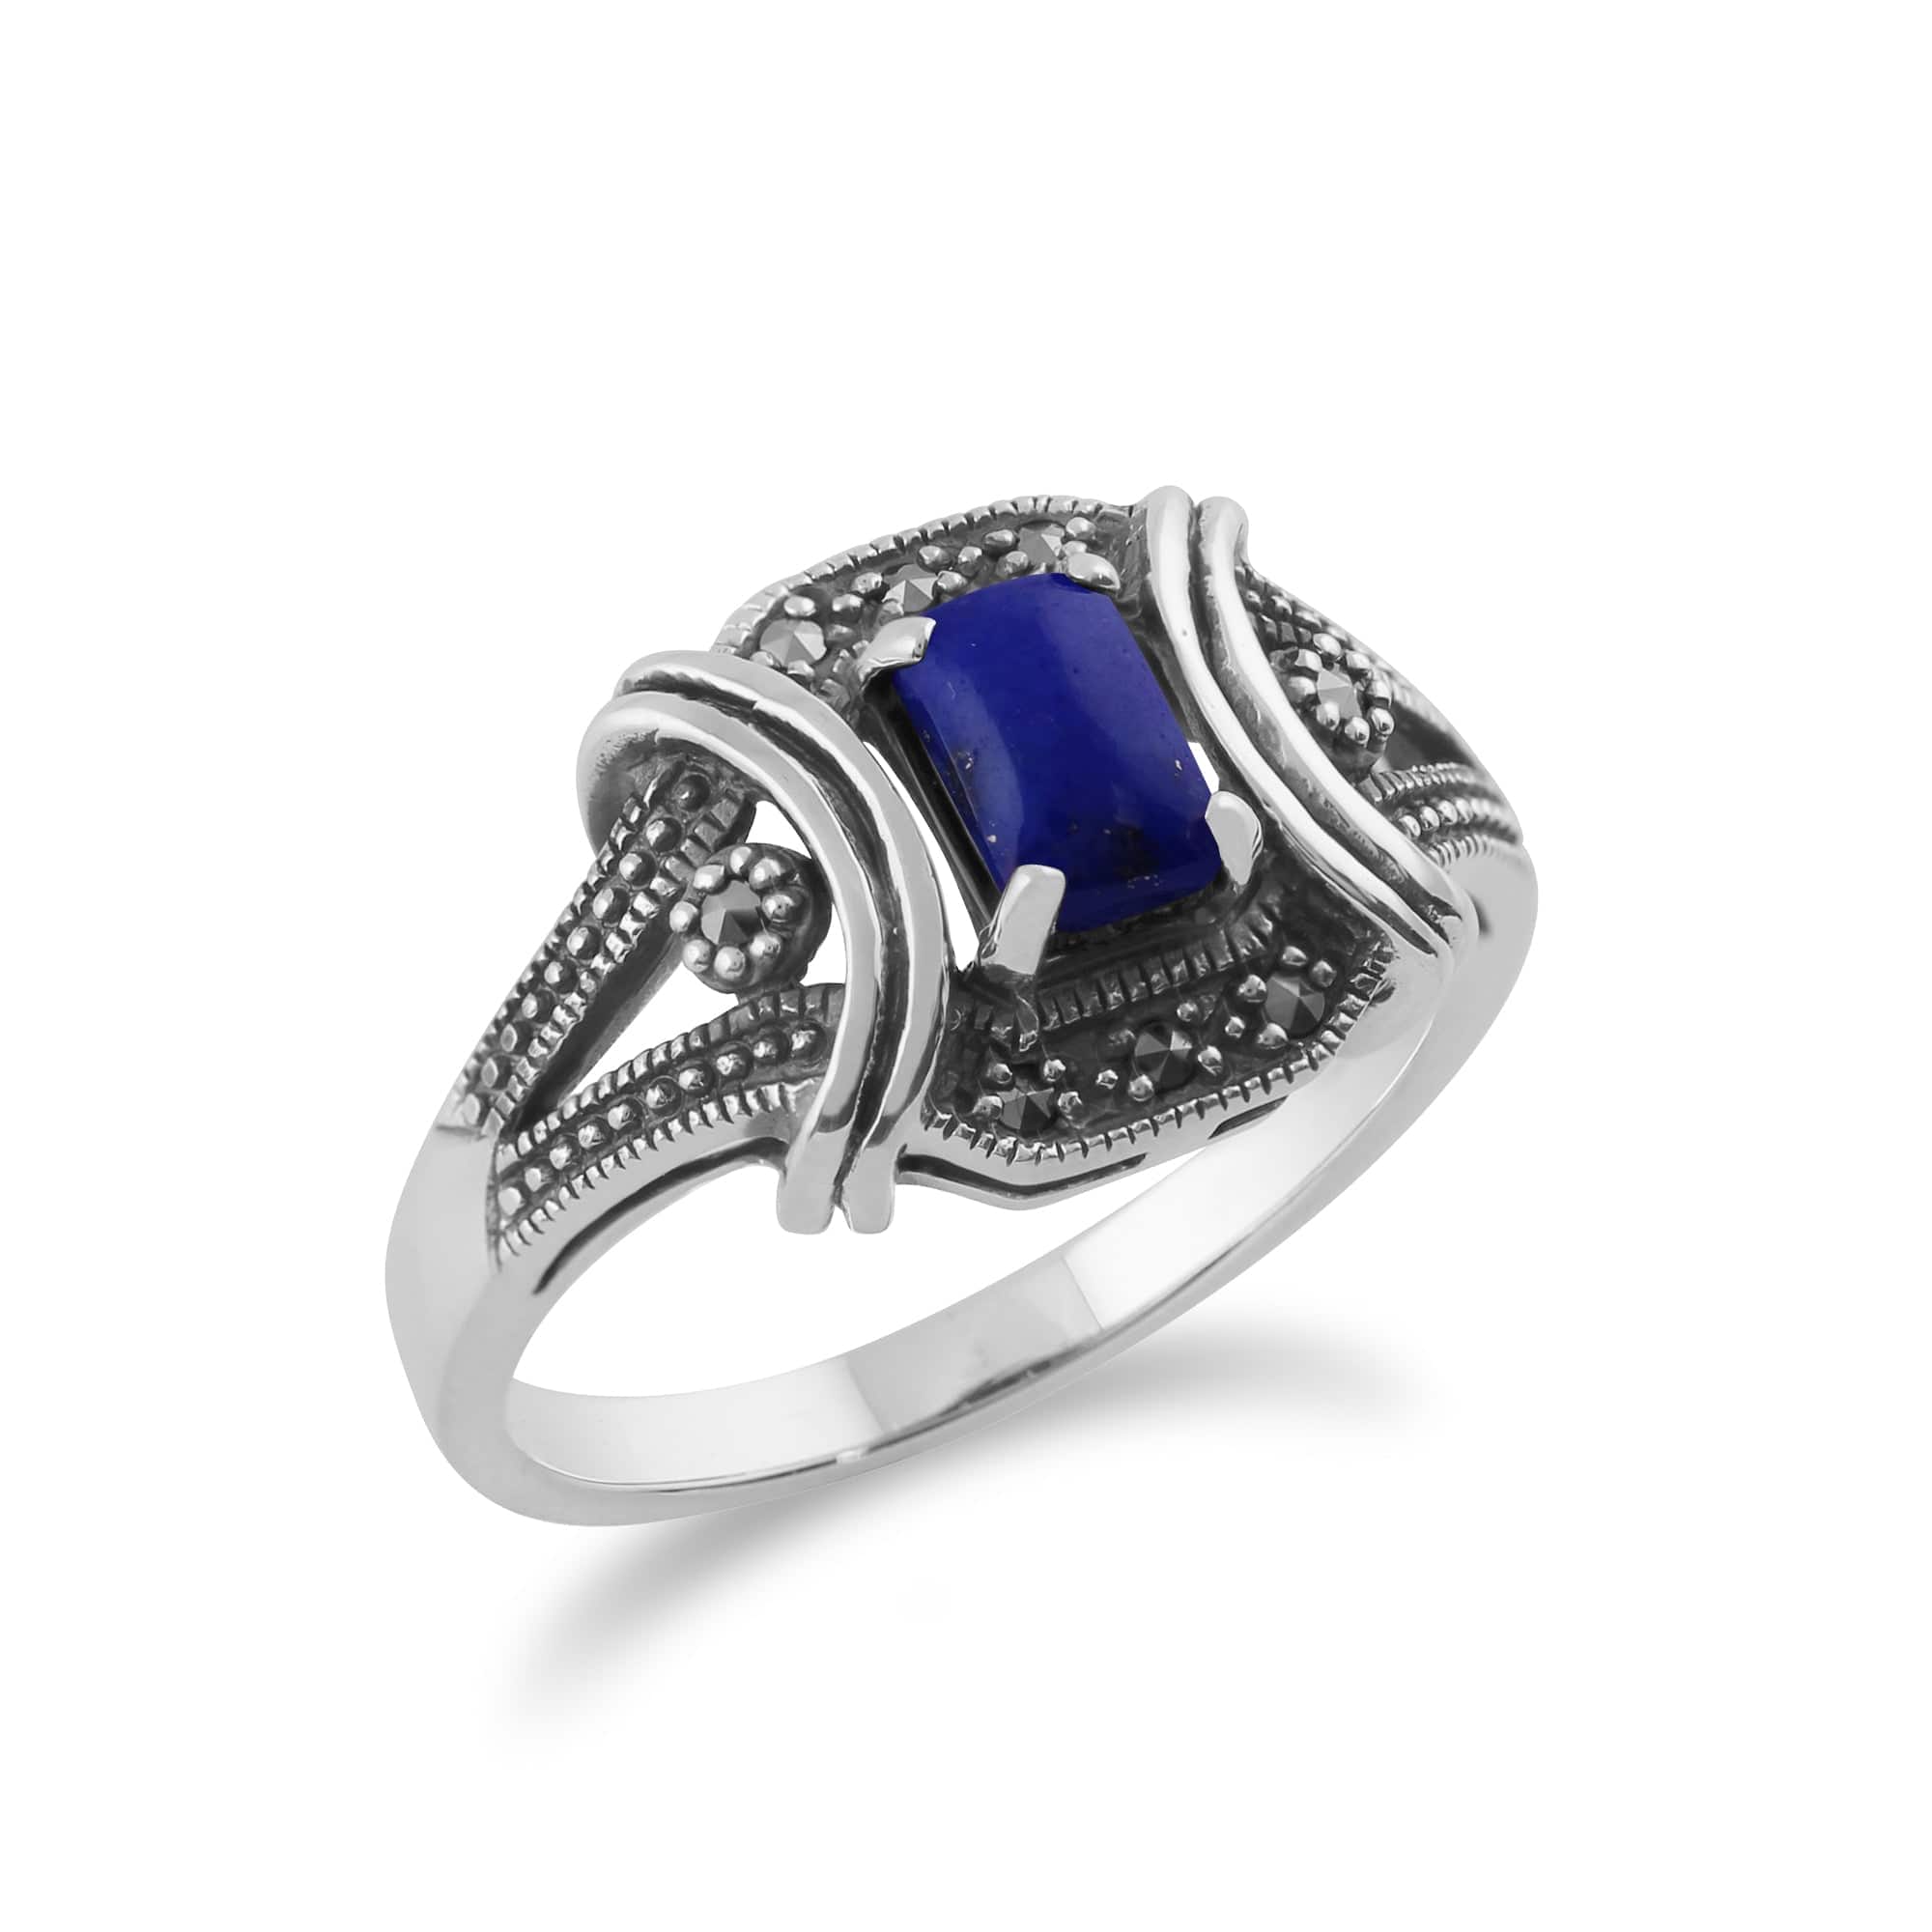 Gemondo 925 Sterling Silver 0.52ct Lapis Lazuli & Marcasite Art Deco Ring Image 2